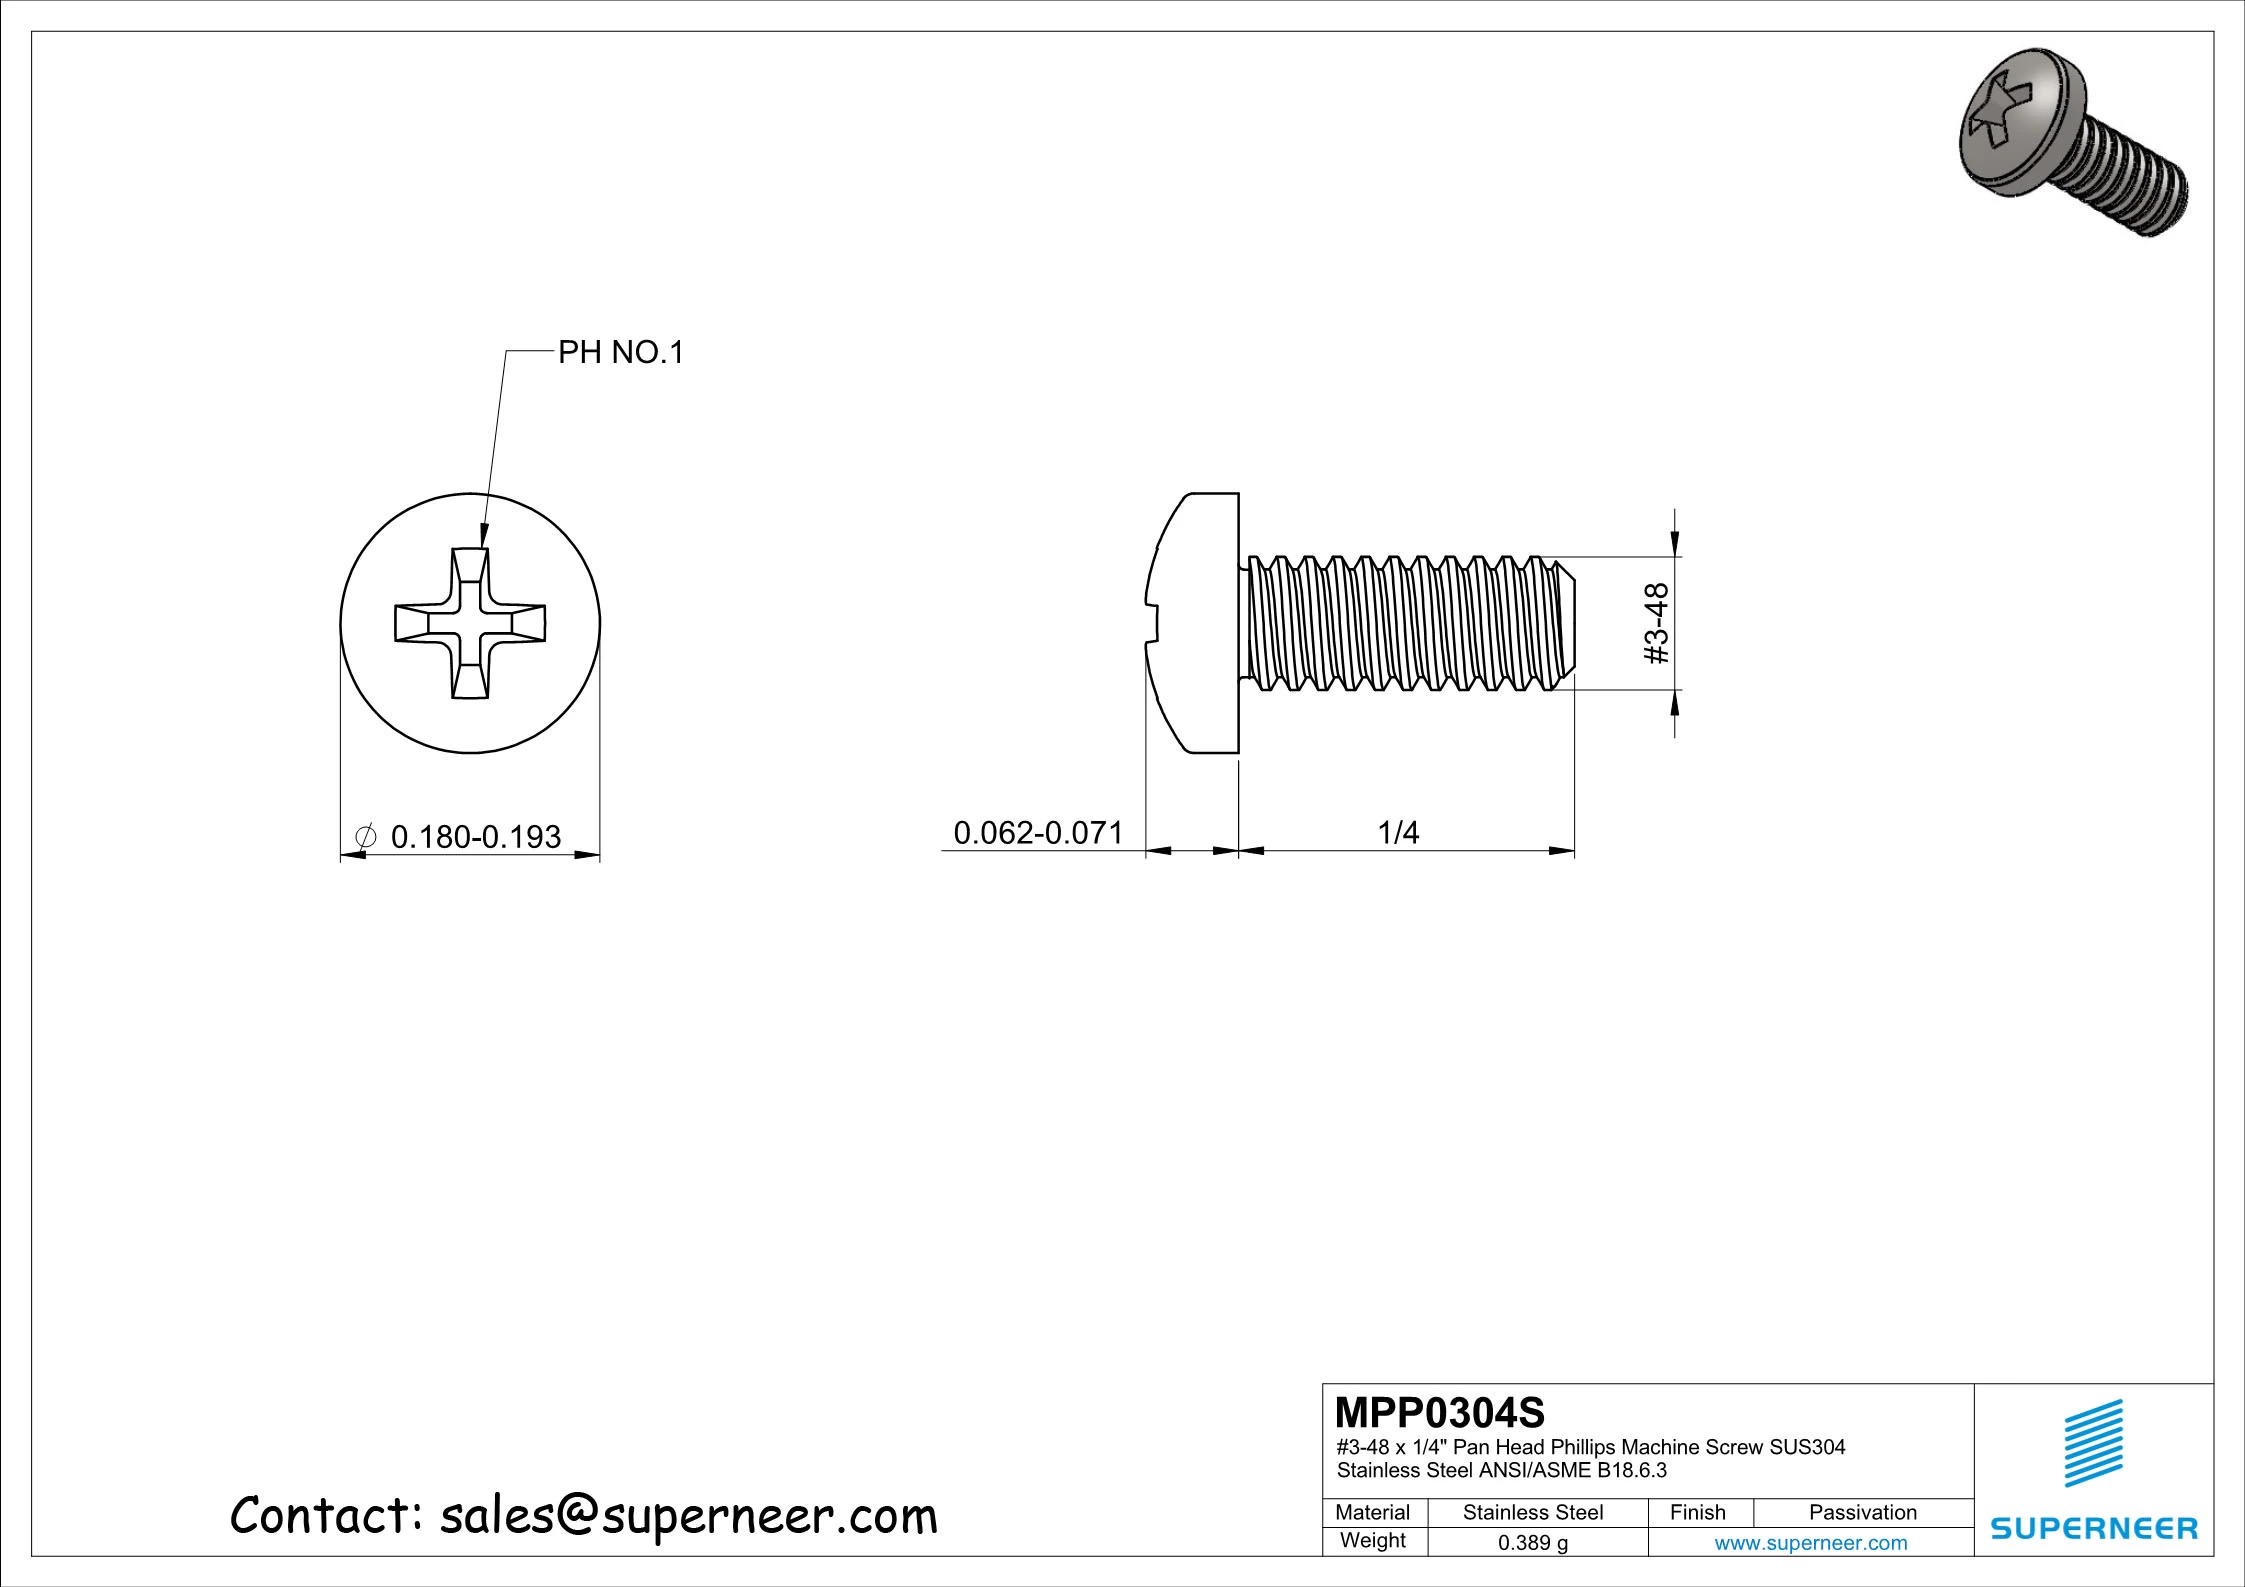 3-48 x 1/4" Pan Head Phillips Machine Screw SUS304 Stainless Steel Inox ANSI/ASME B18.6.3